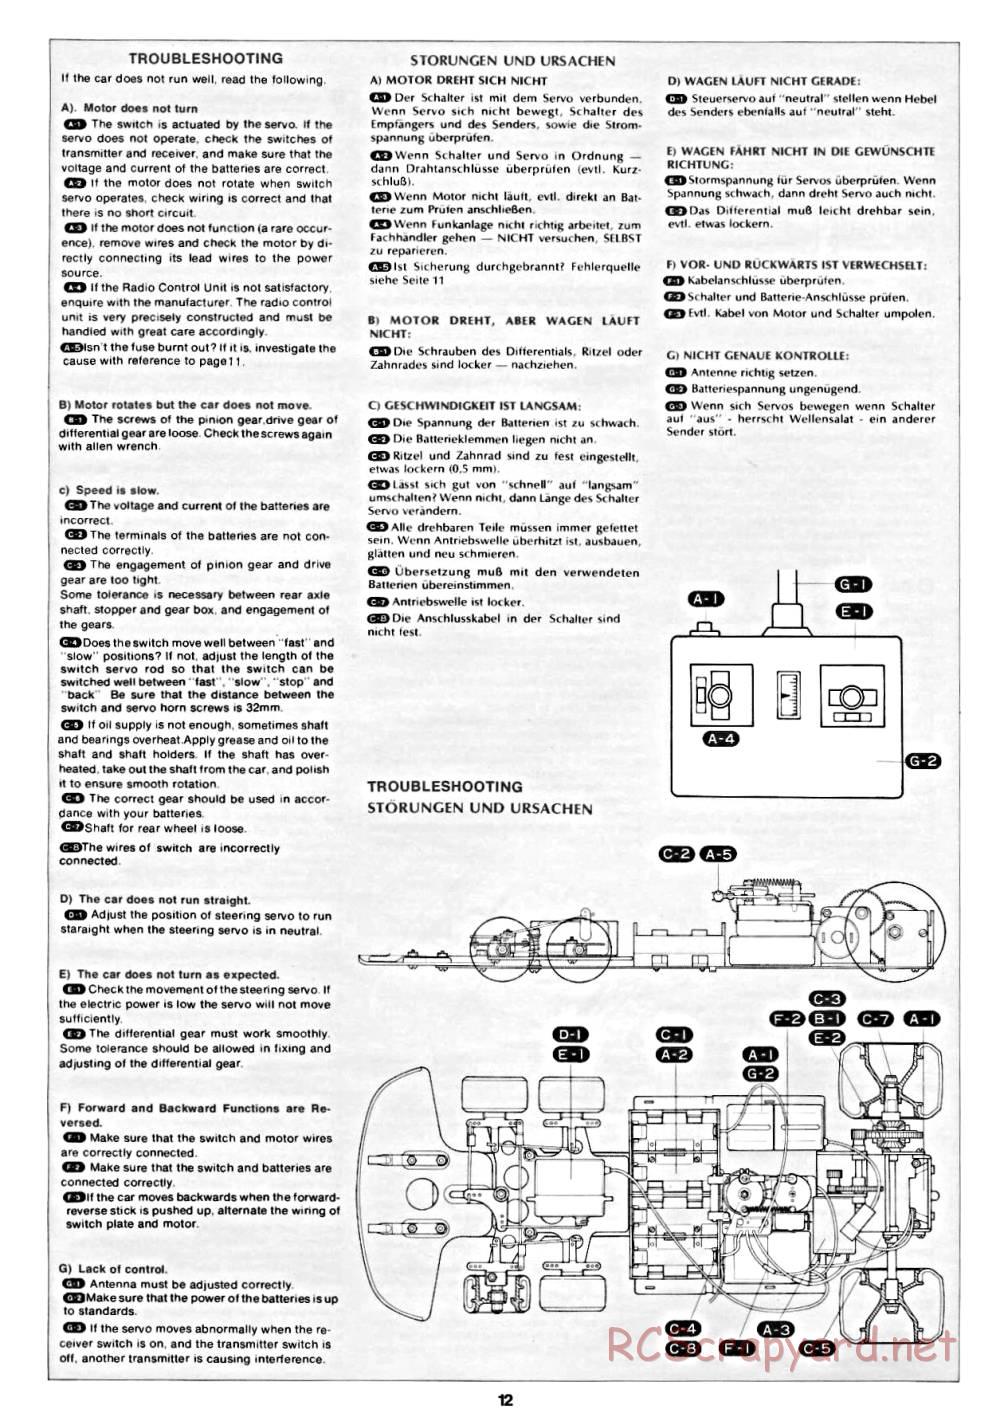 Tamiya - Tyrrell P34 Six Wheeler - 58003 - Manual - Page 12